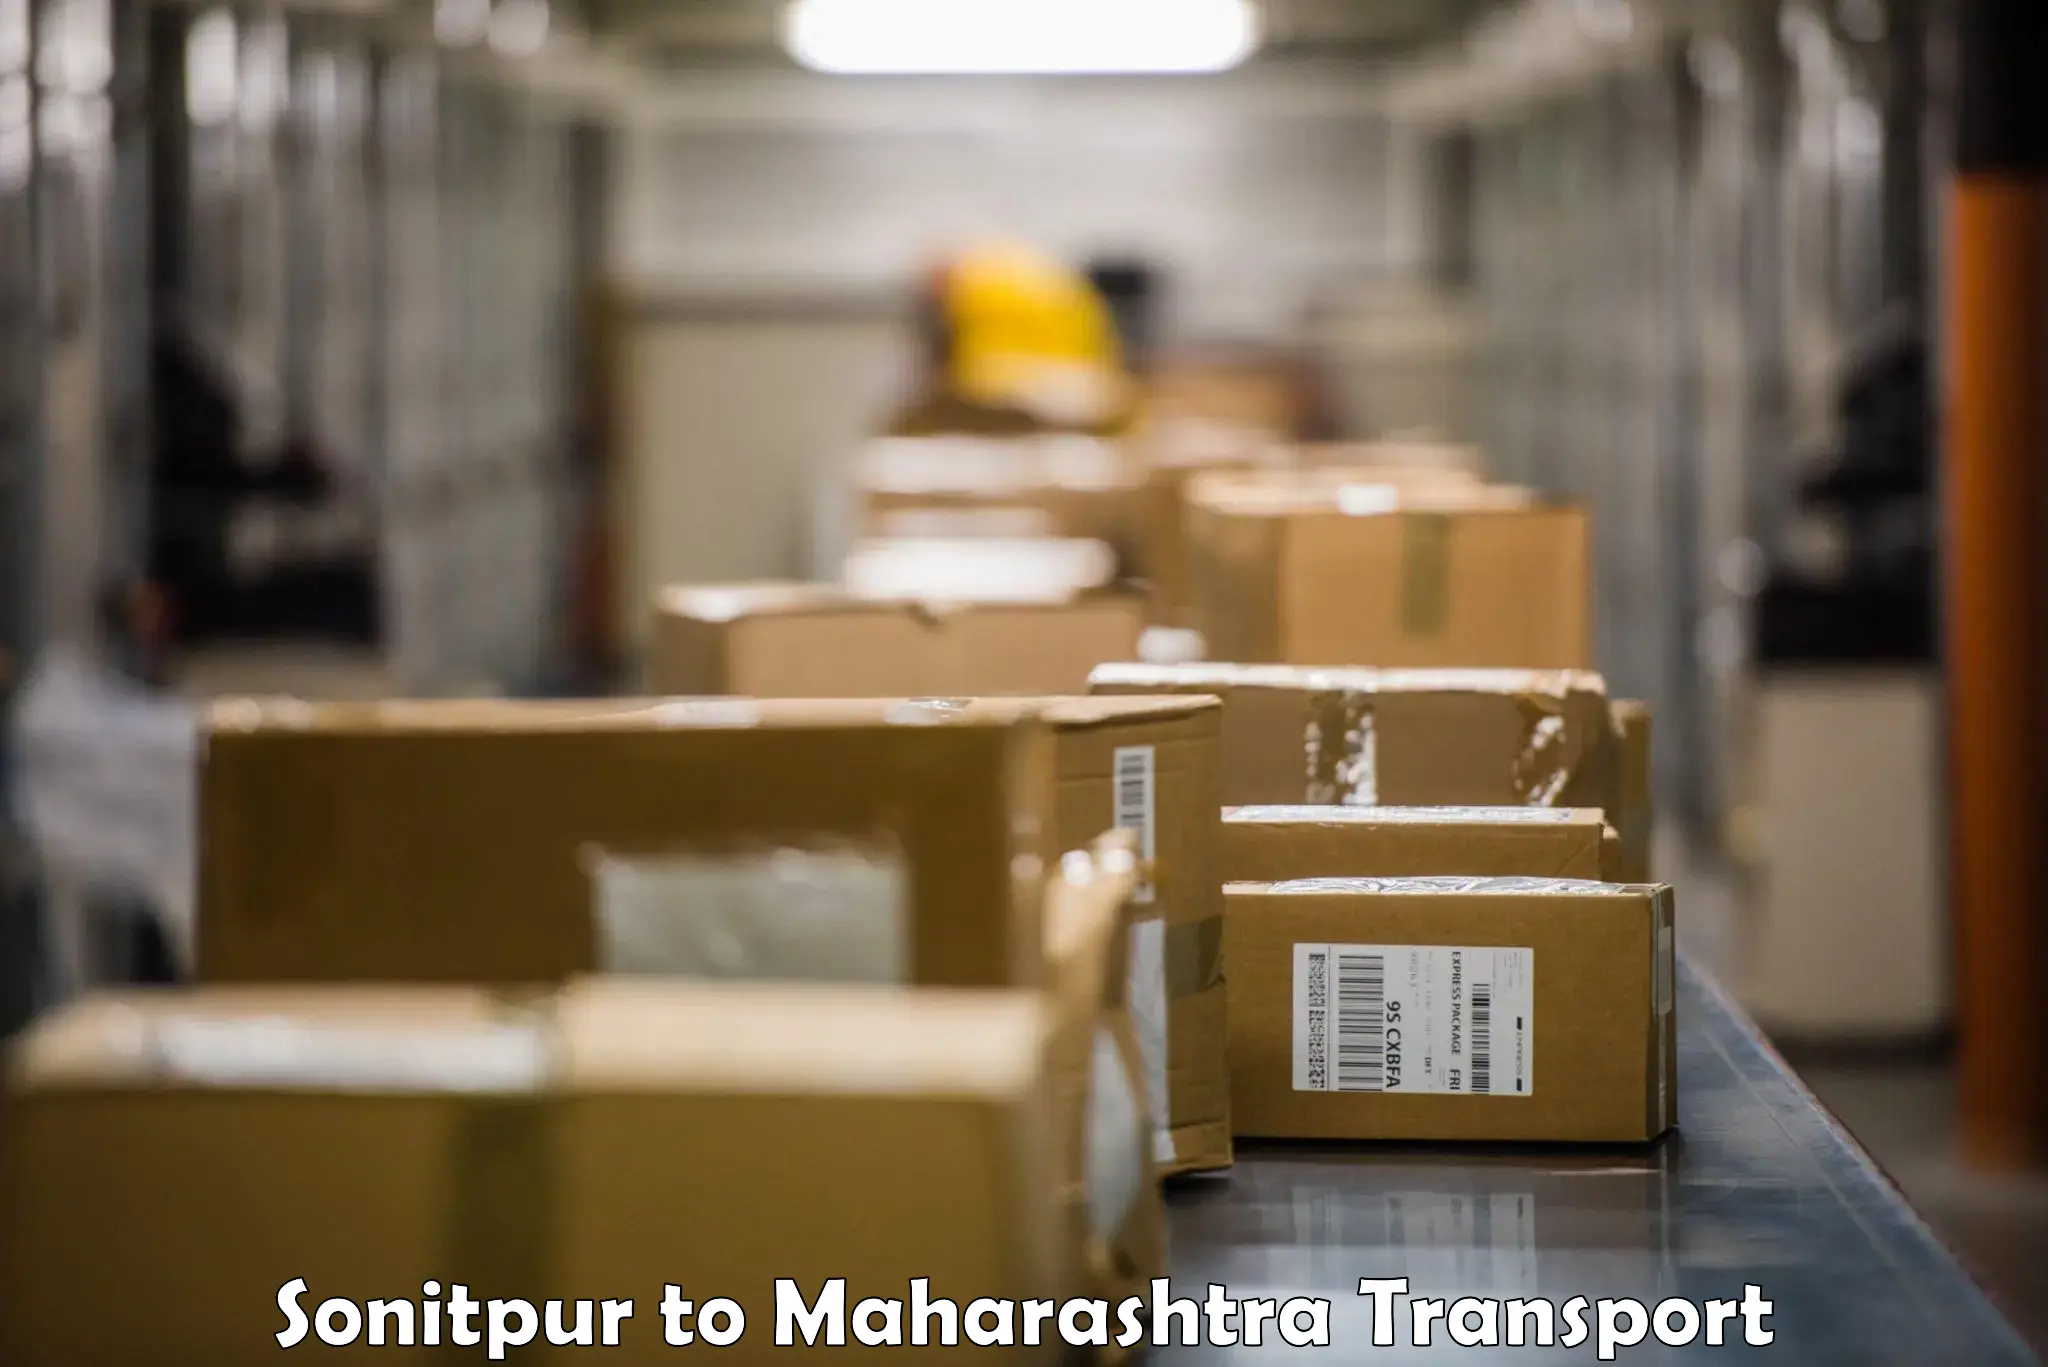 Furniture transport service Sonitpur to Walchandnagar